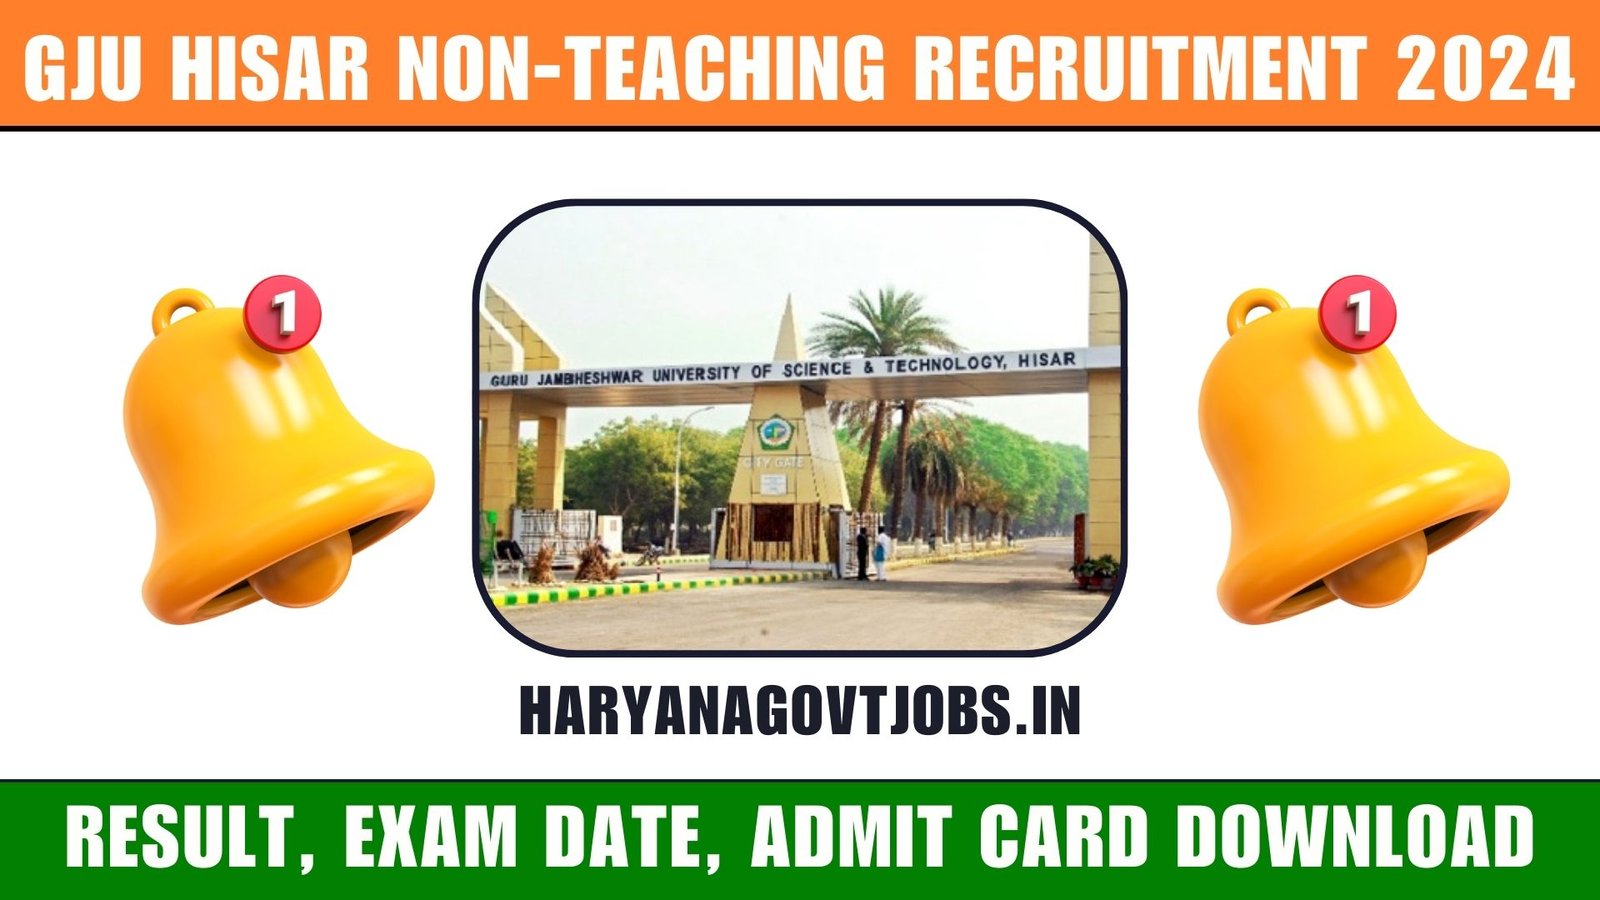 GJU Hisar Non-Teaching Recruitment 2024 Result, Exam Date, Admit Card Download